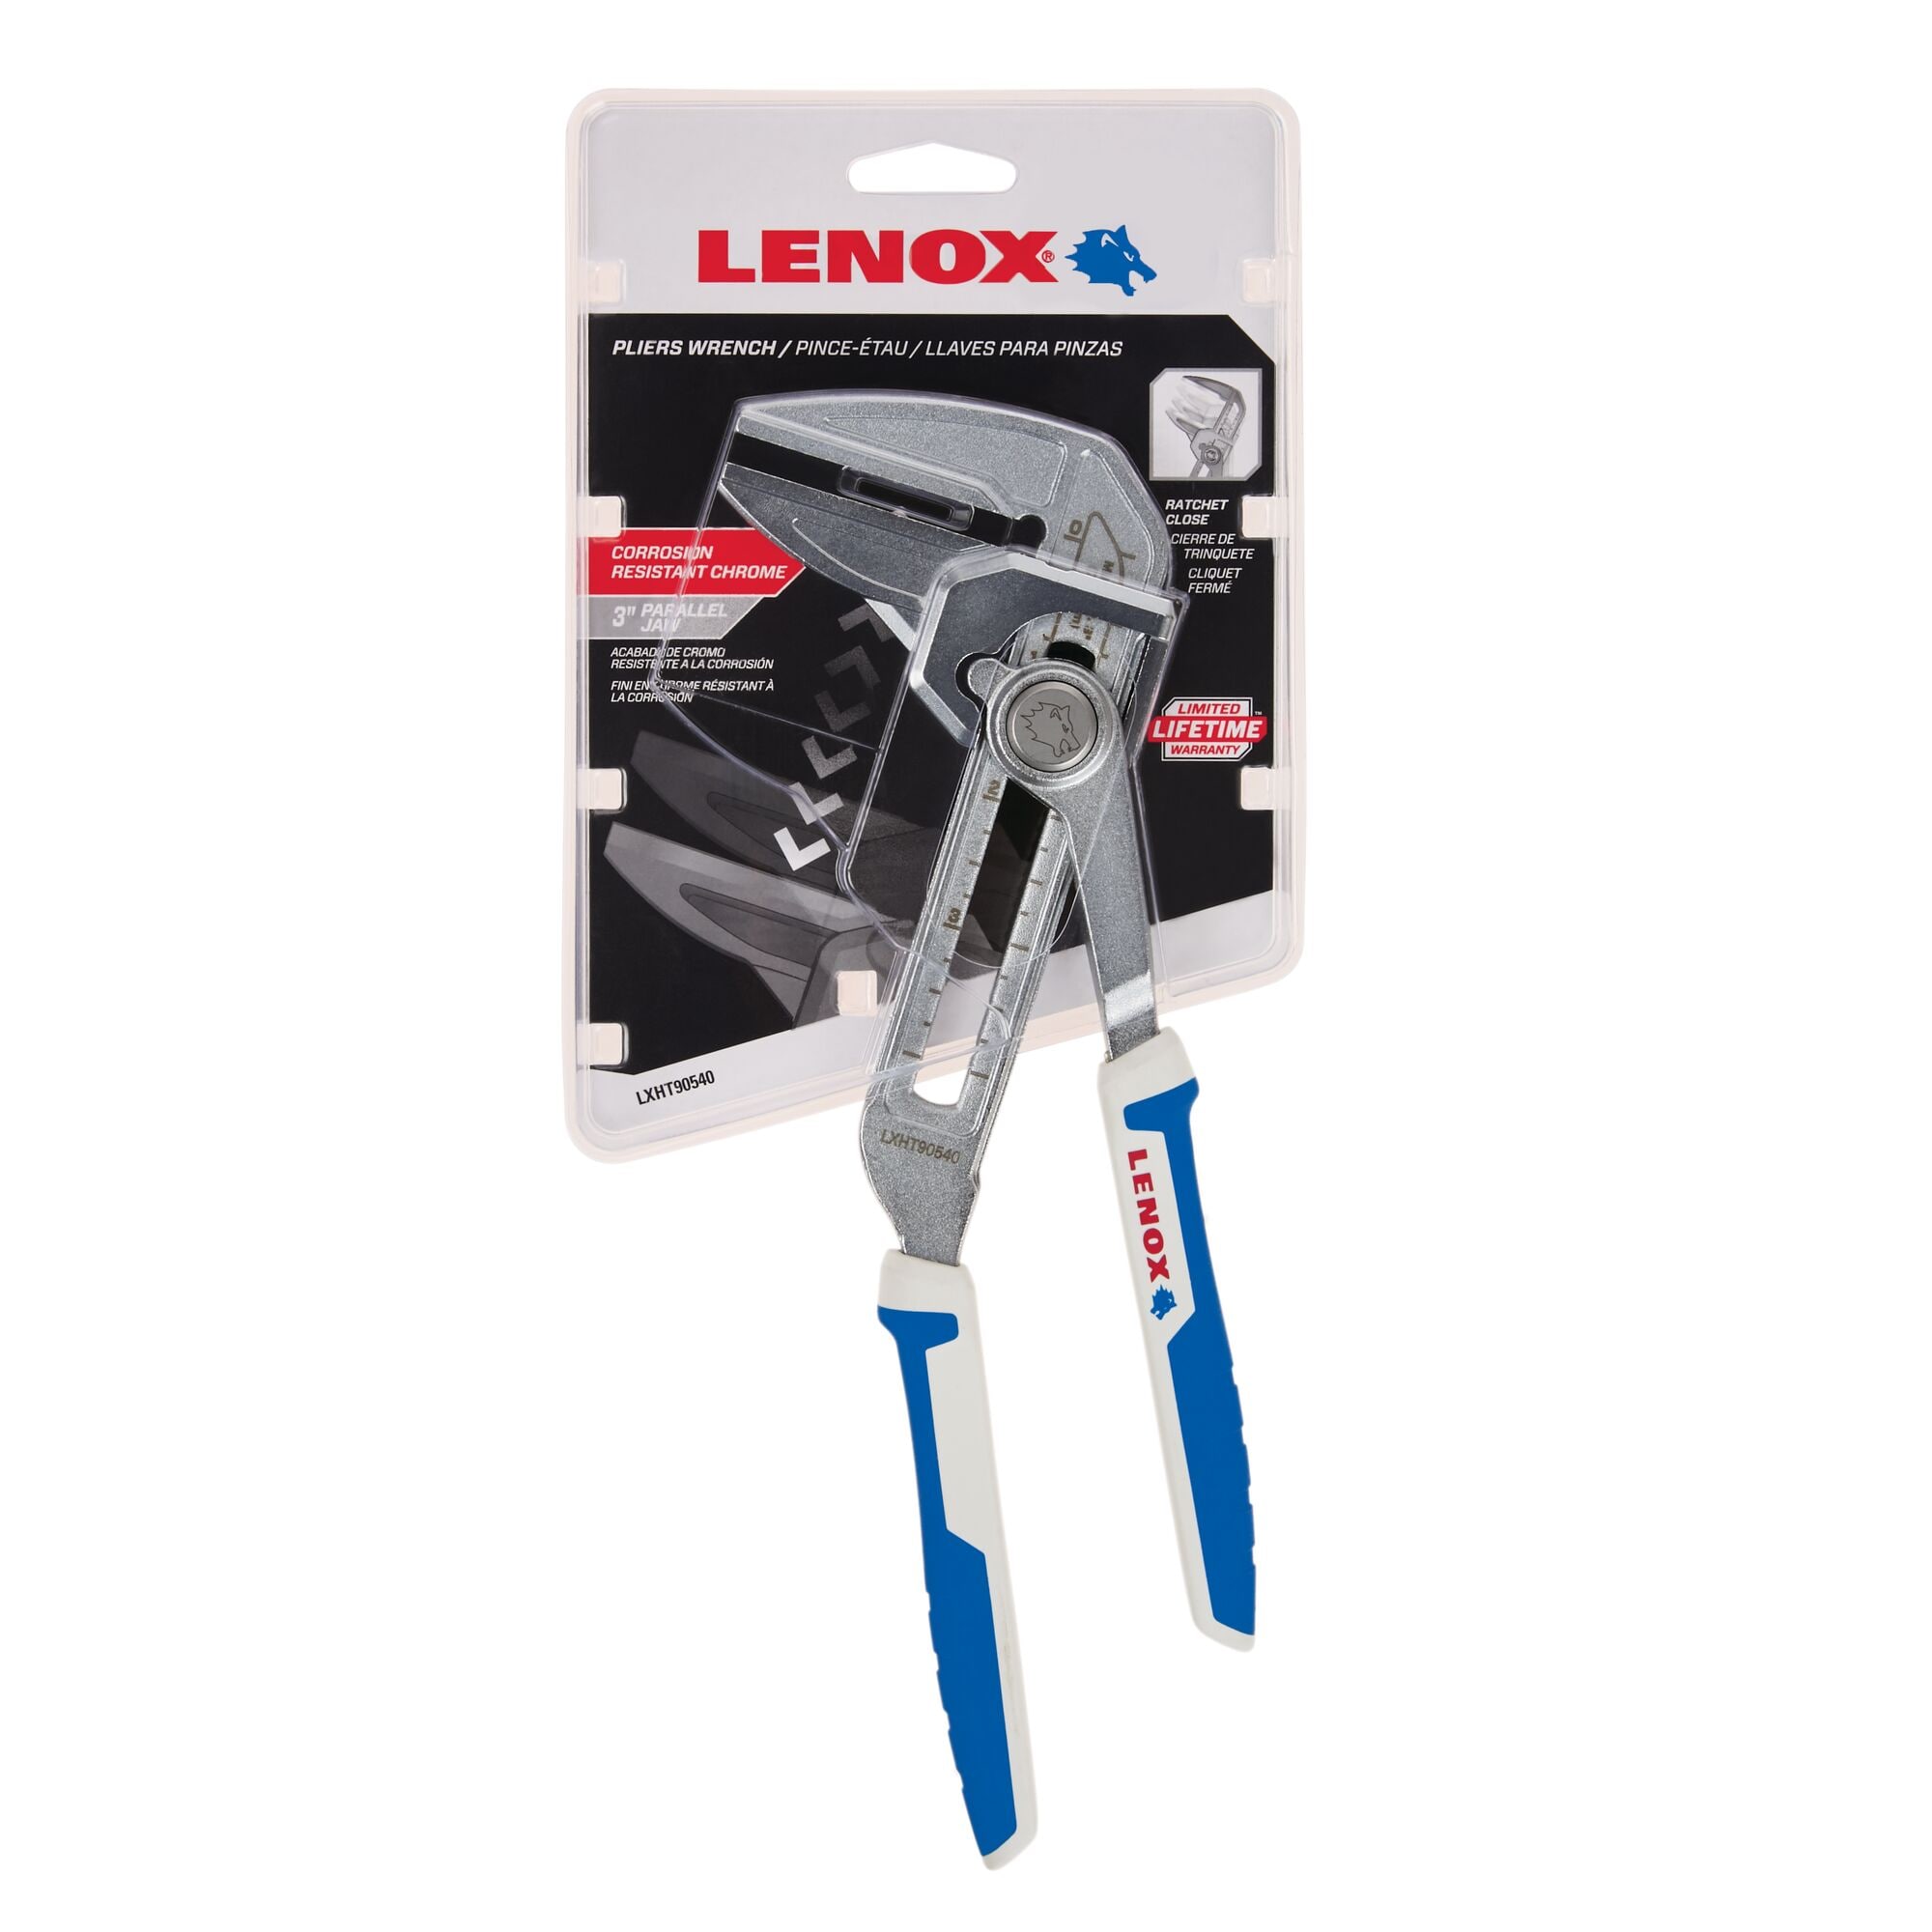 Lenox LXHT90540 Pliers Wrench